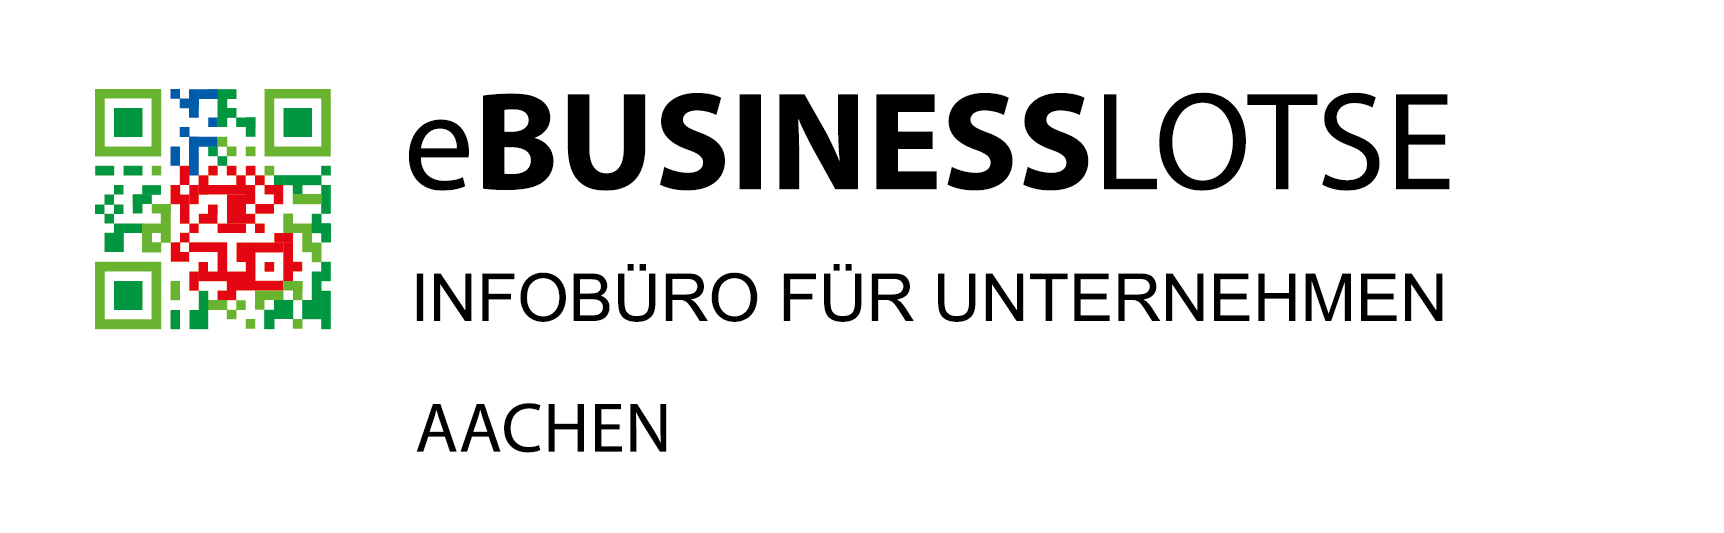 Logo des Projekts eBusiness-Lorse Aachen